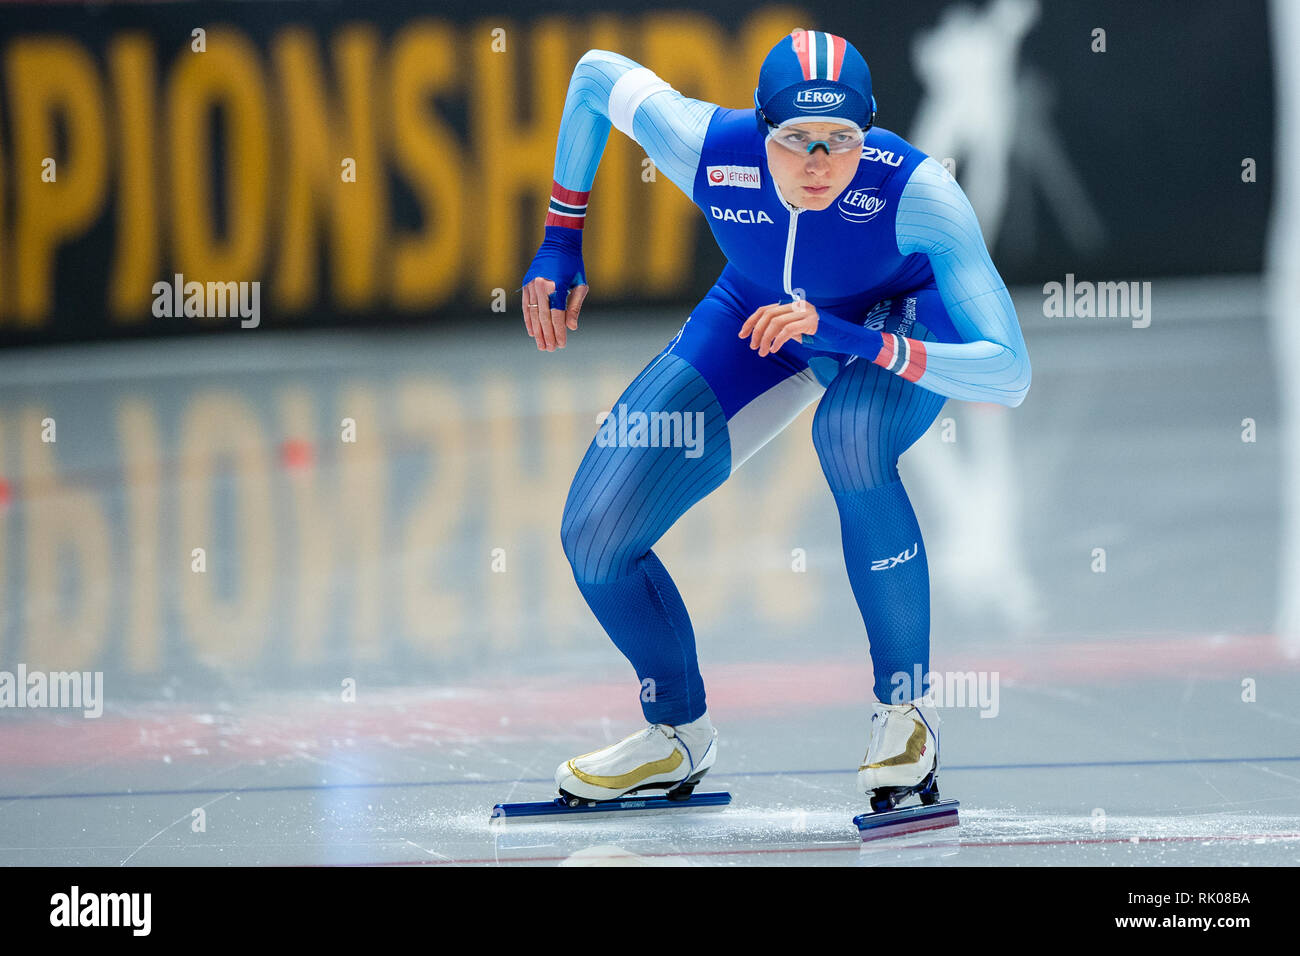 Germany. 8th Feb 2019. ISU World Single Distances Speed Skating Championships Hege Bokko Credit: Orange Pictures vof/Alamy Live News Stock Photo - Alamy